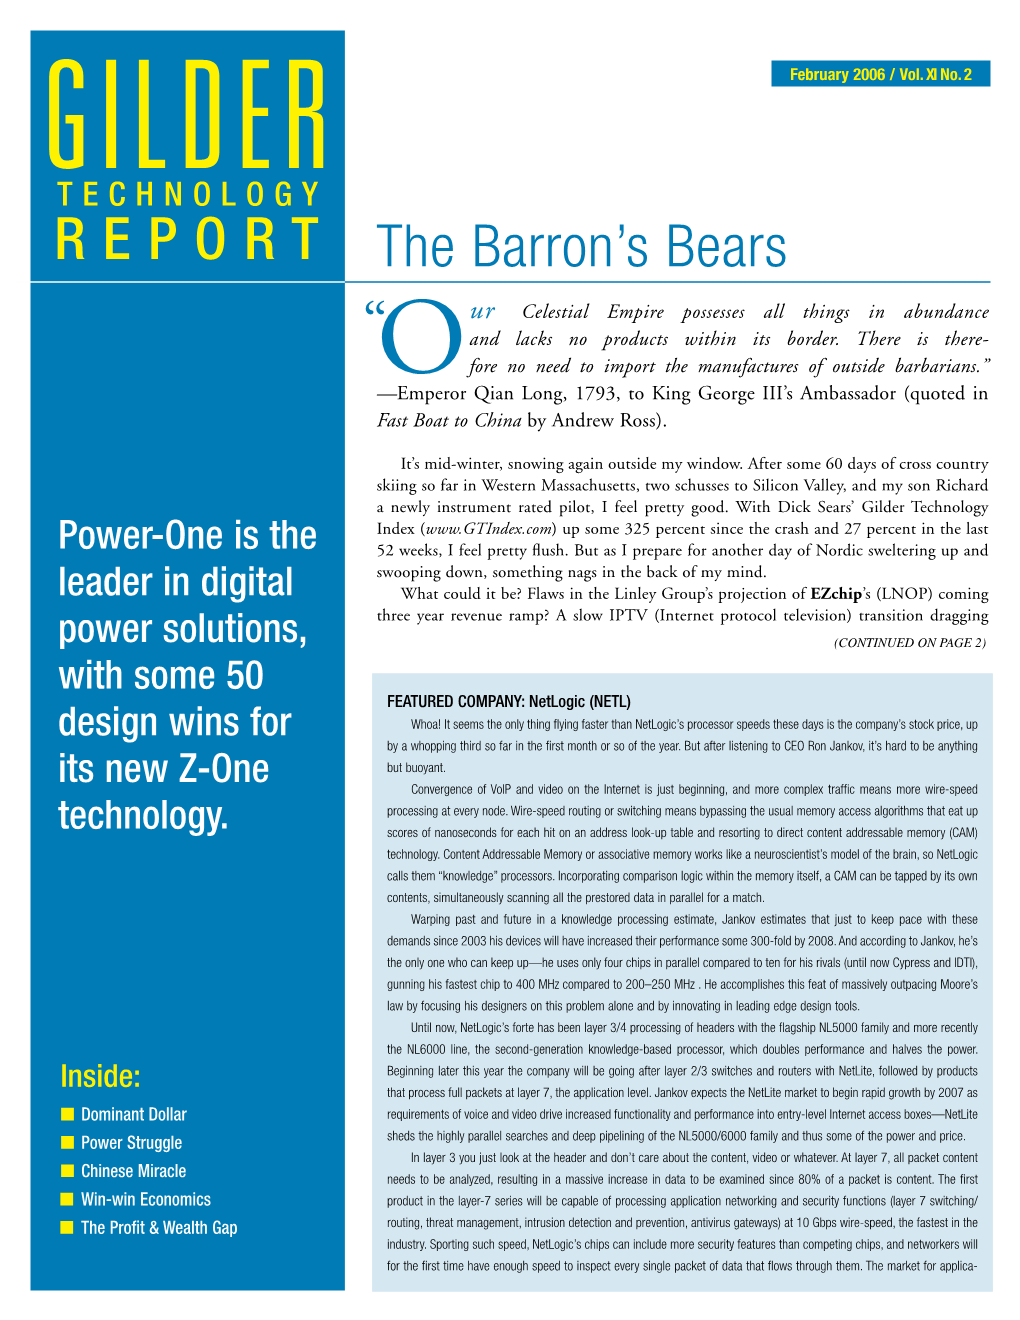 REPORT the Barron's Bears